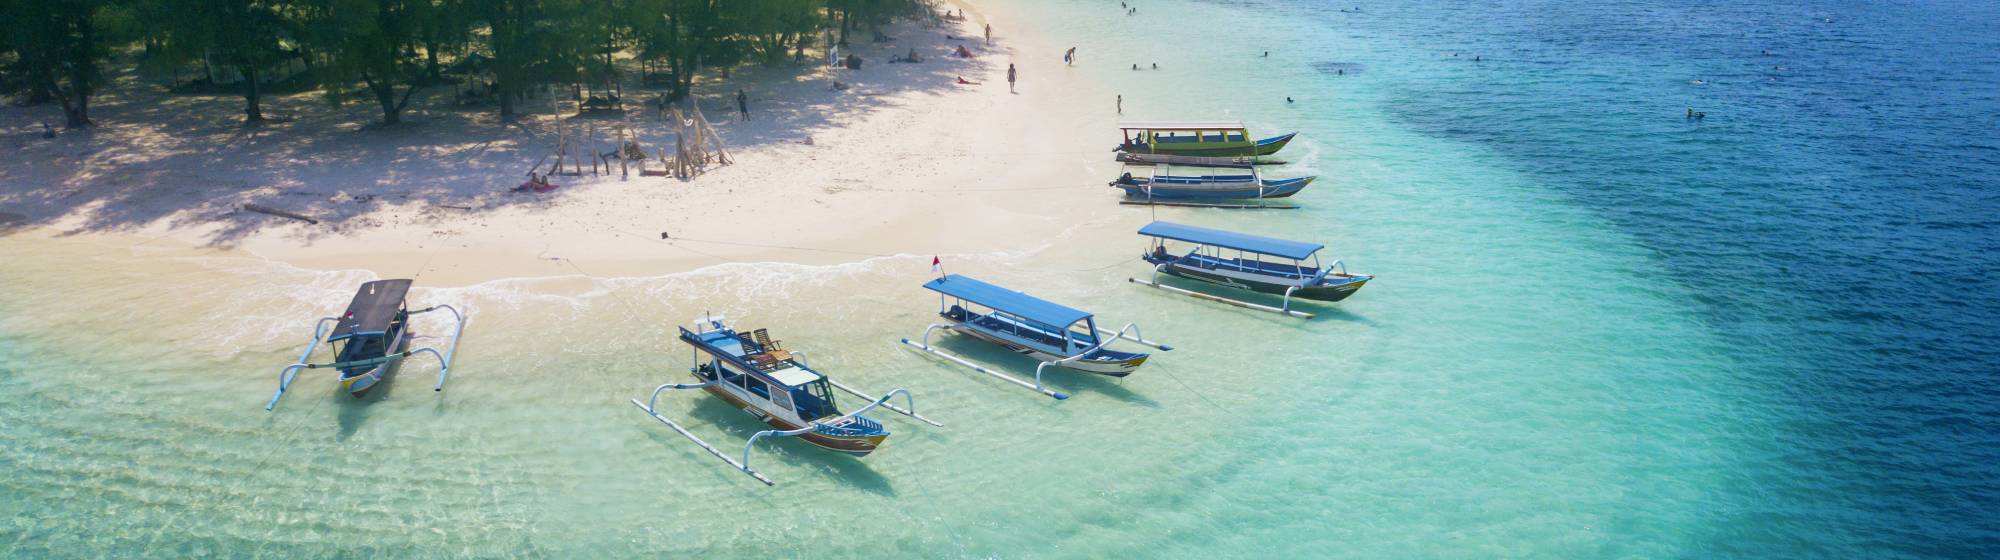 Des catamarans au bord d'une plage paradisiaque. 